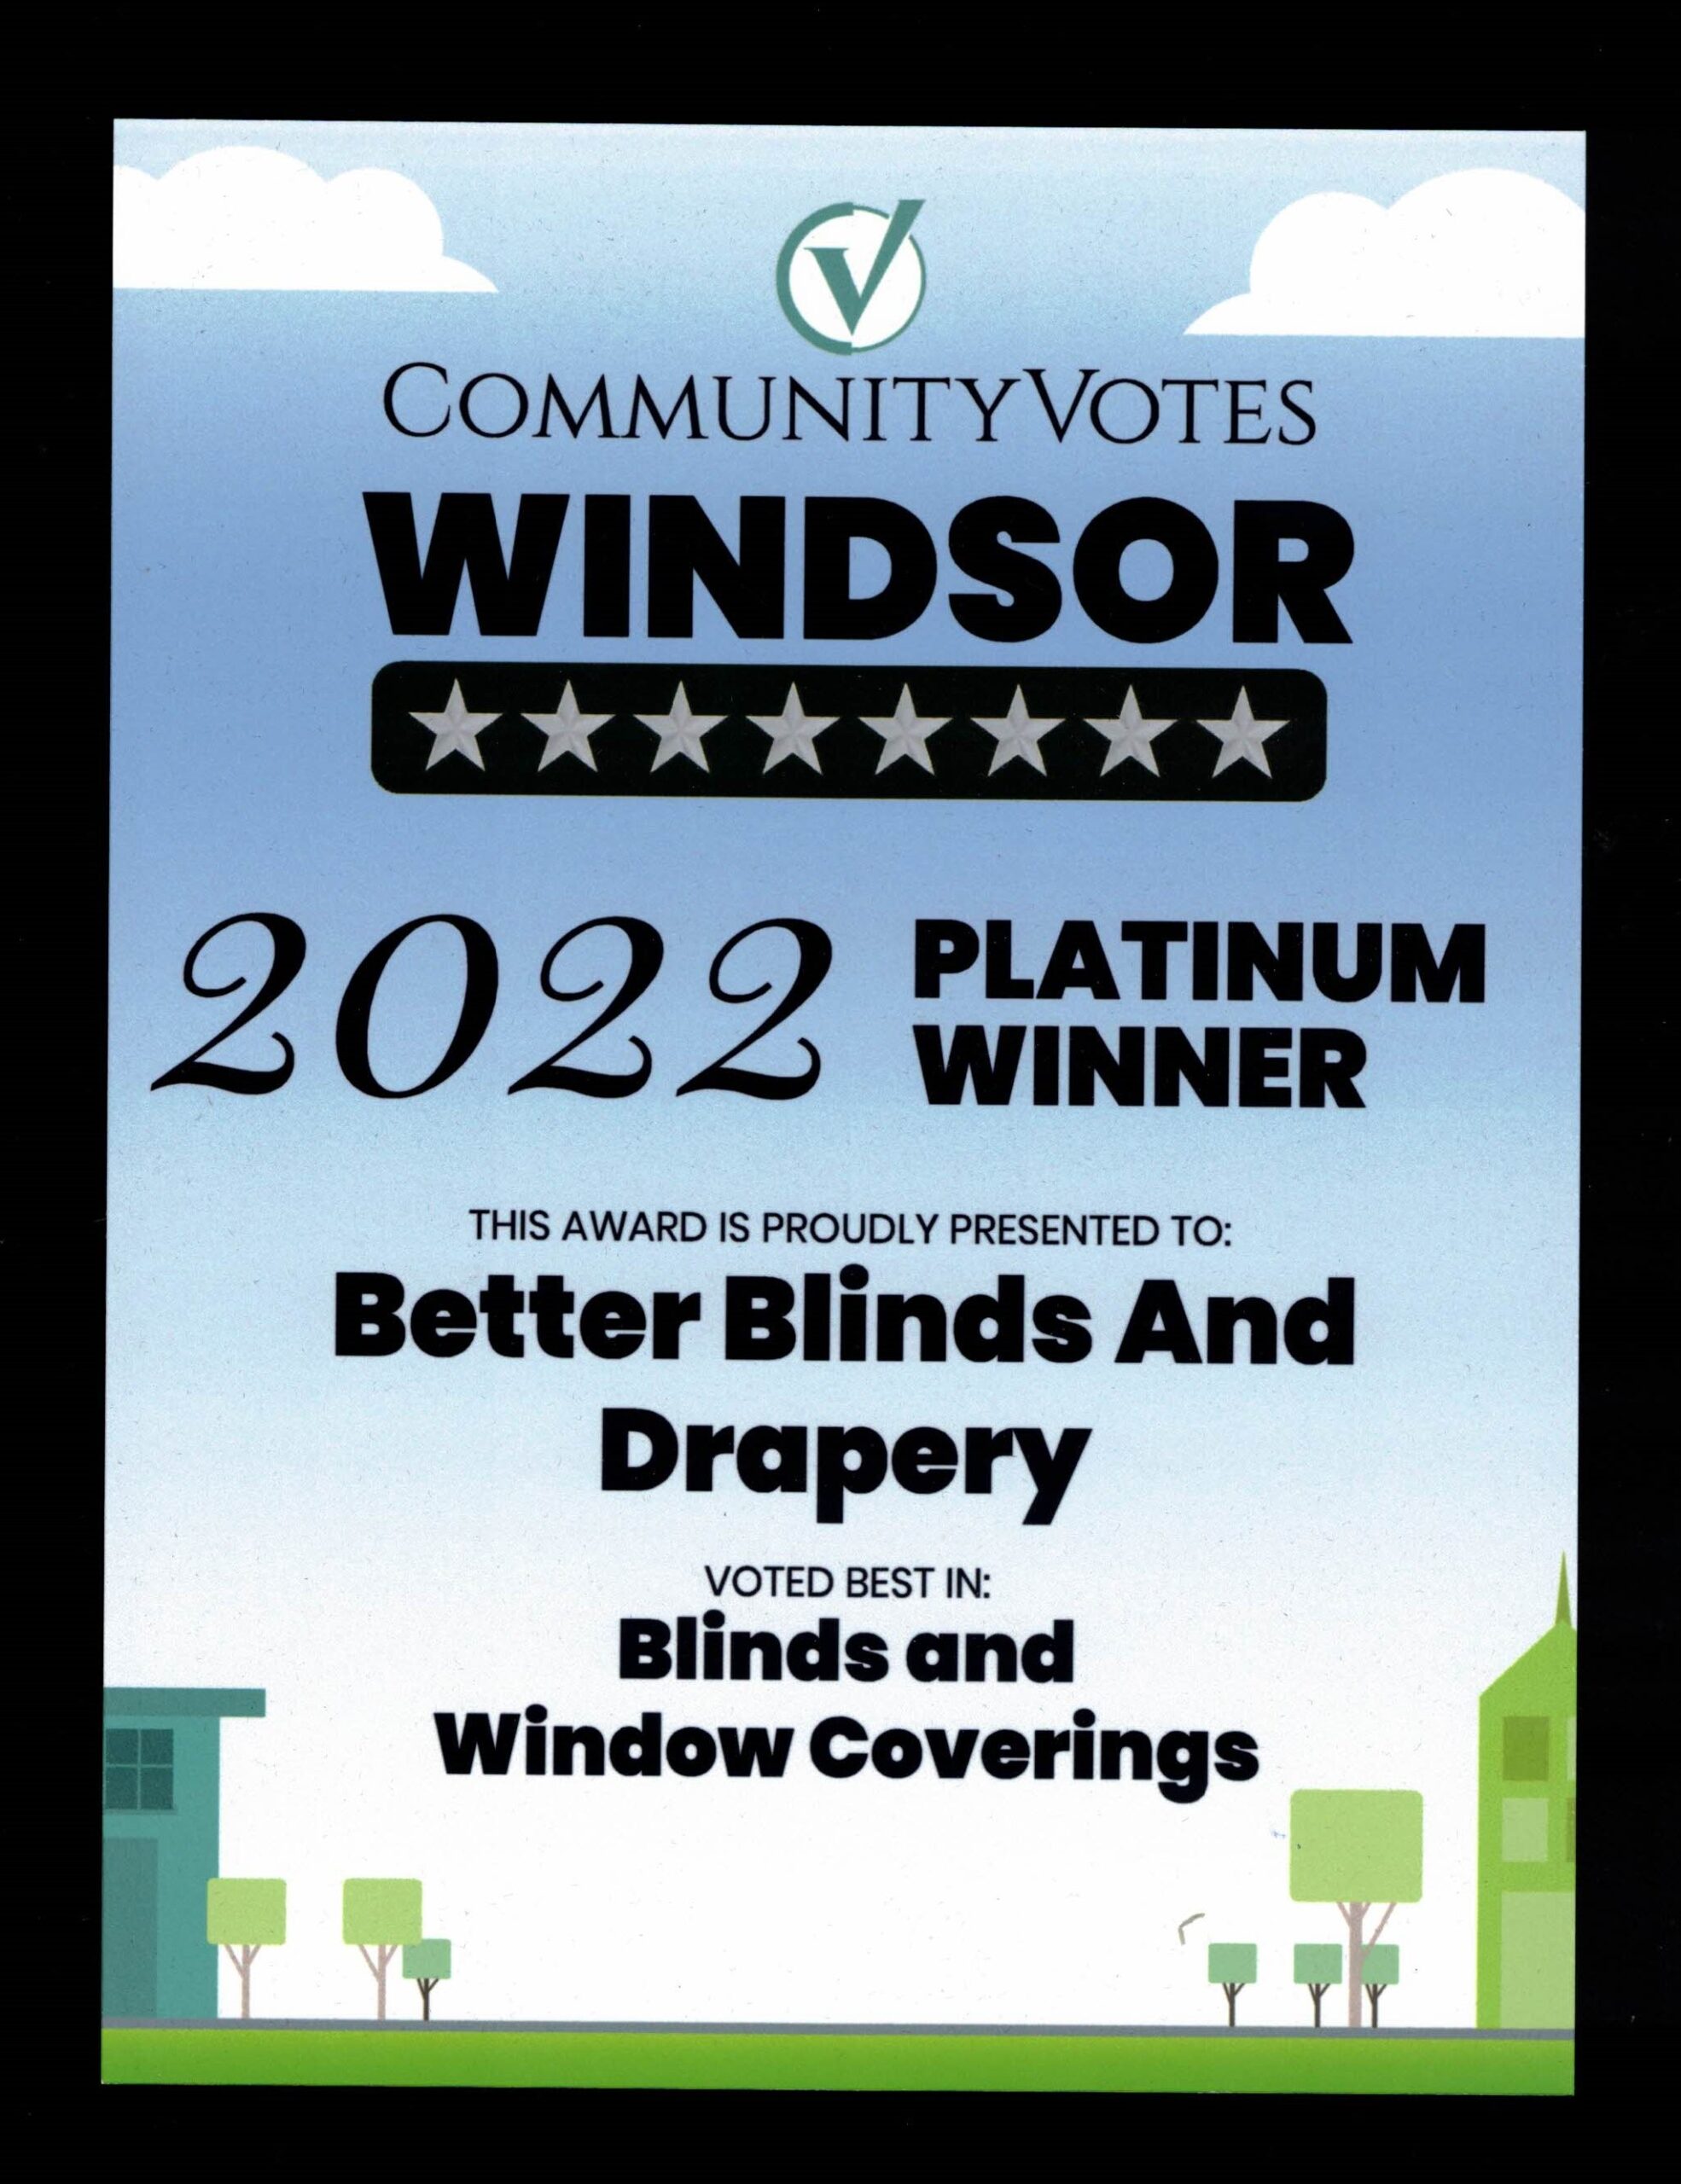 Community votes Windsor 2022